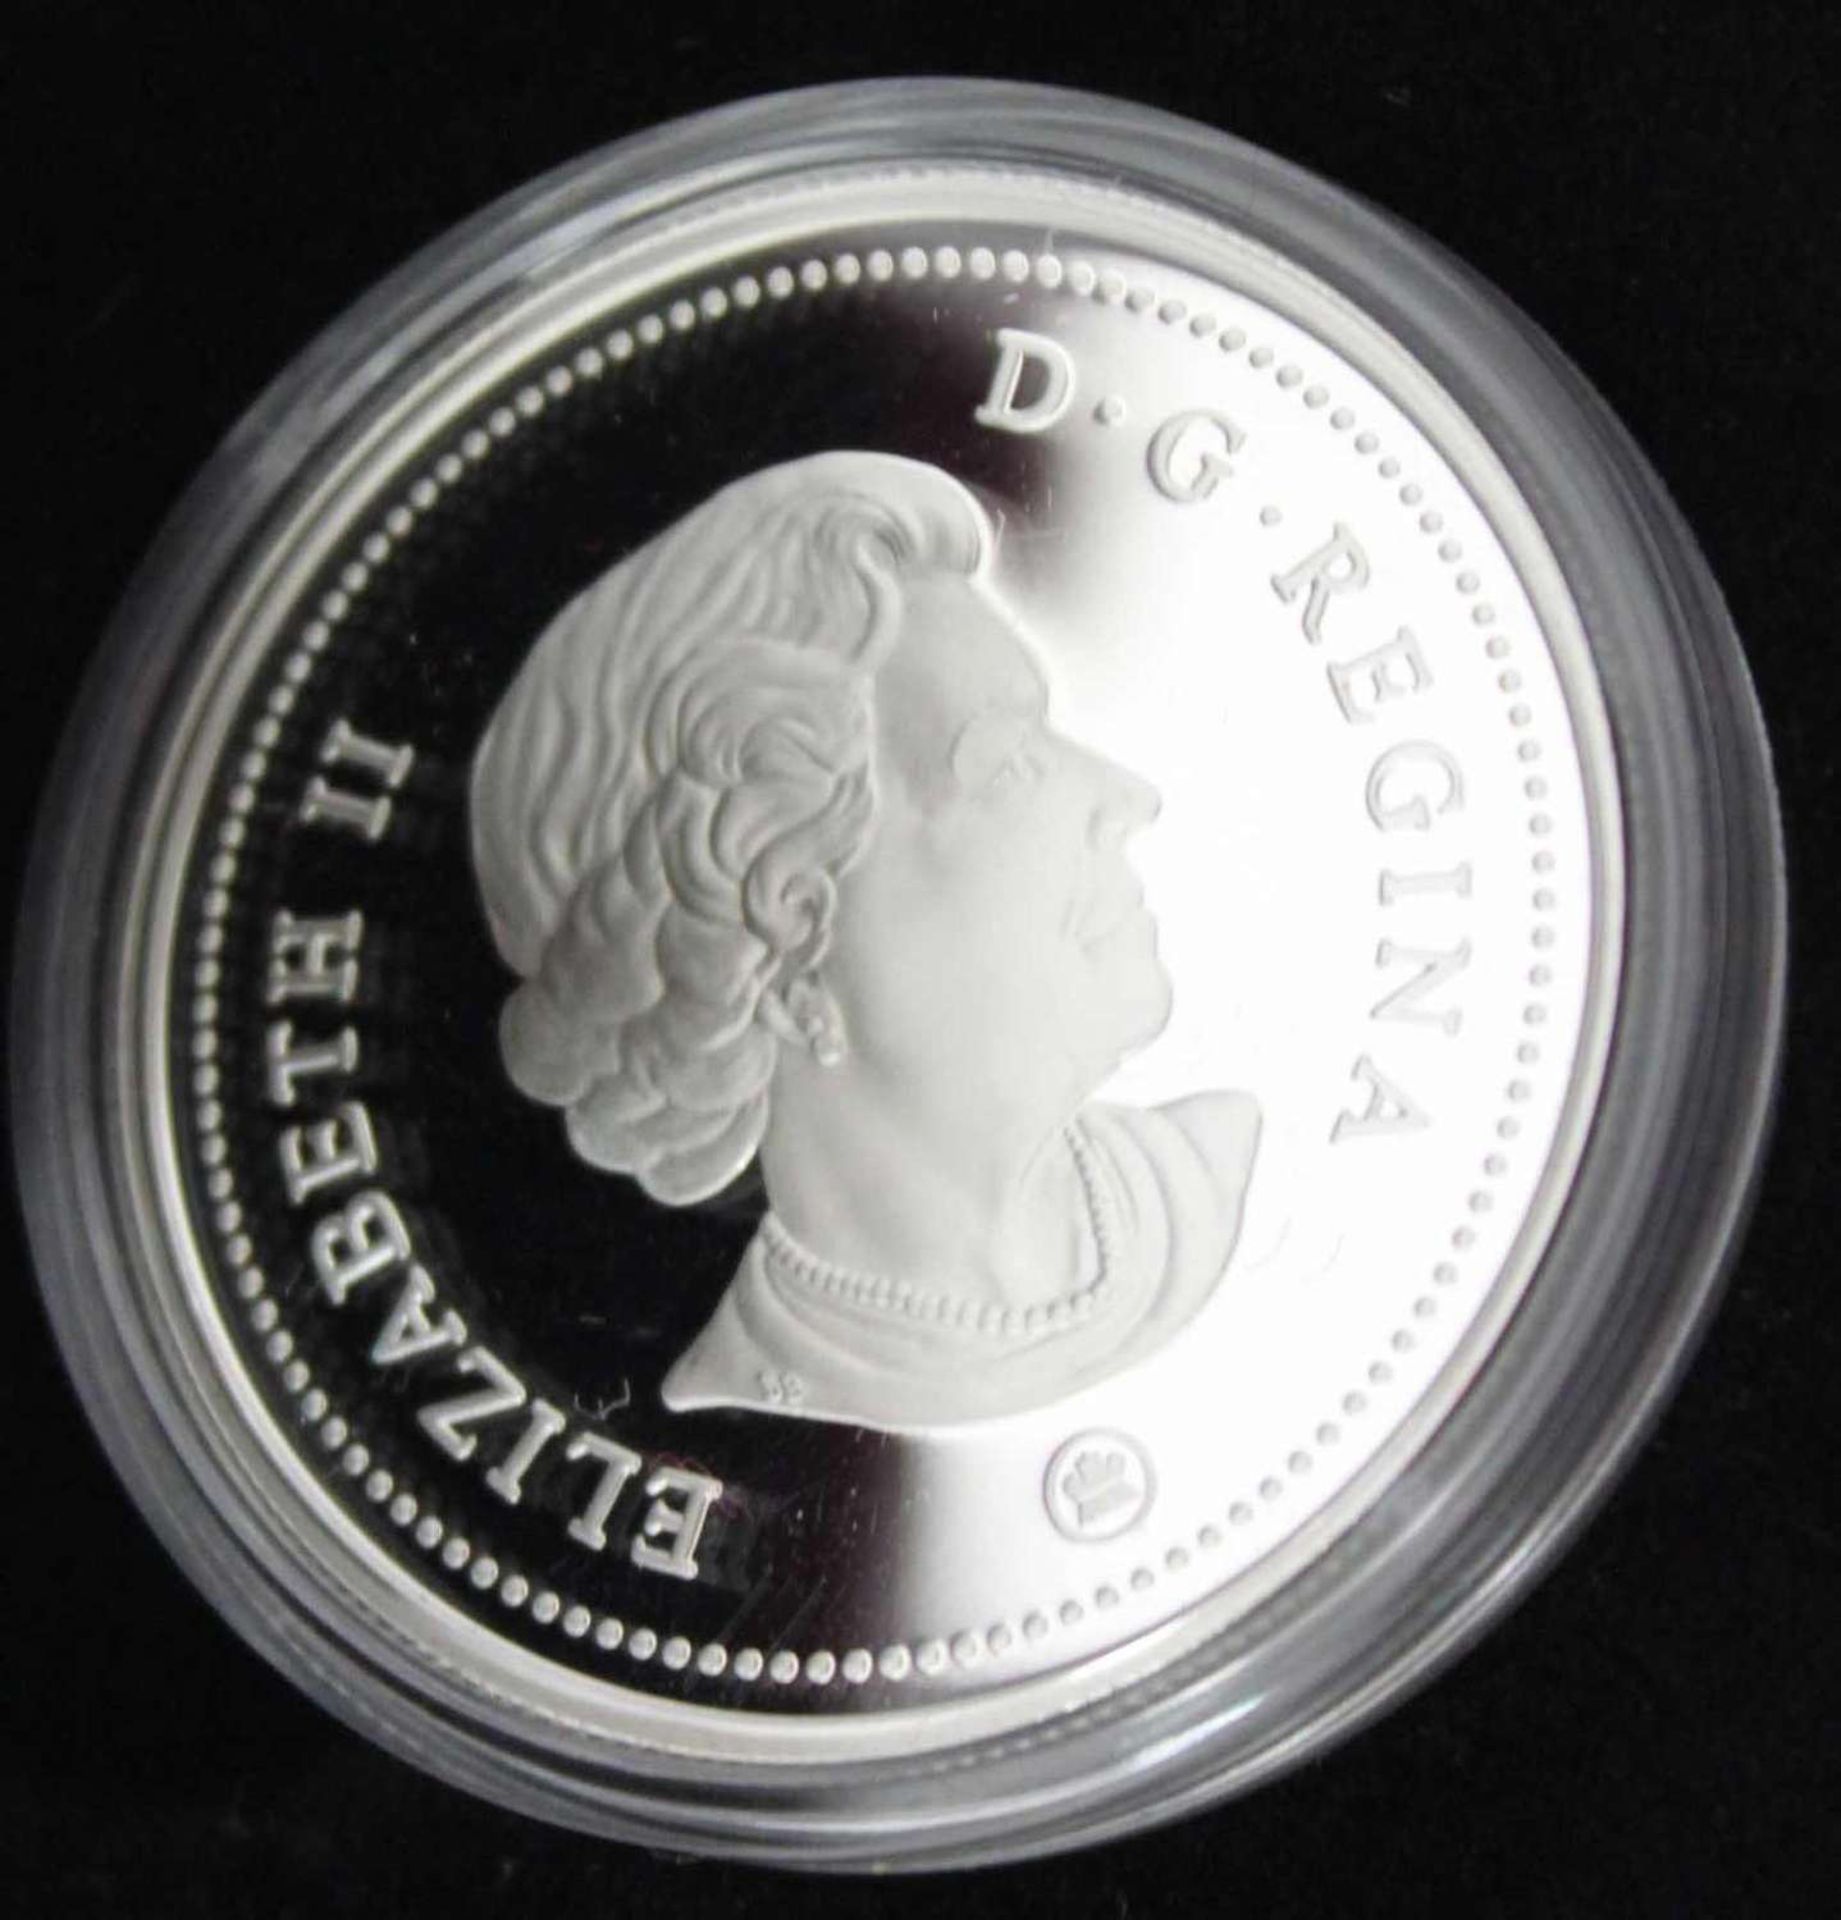 Canada Dollar von 2008 Quebec City Samuel de Champlain , Proof Silver Dollar im Etui Canada Dollar - Bild 3 aus 3